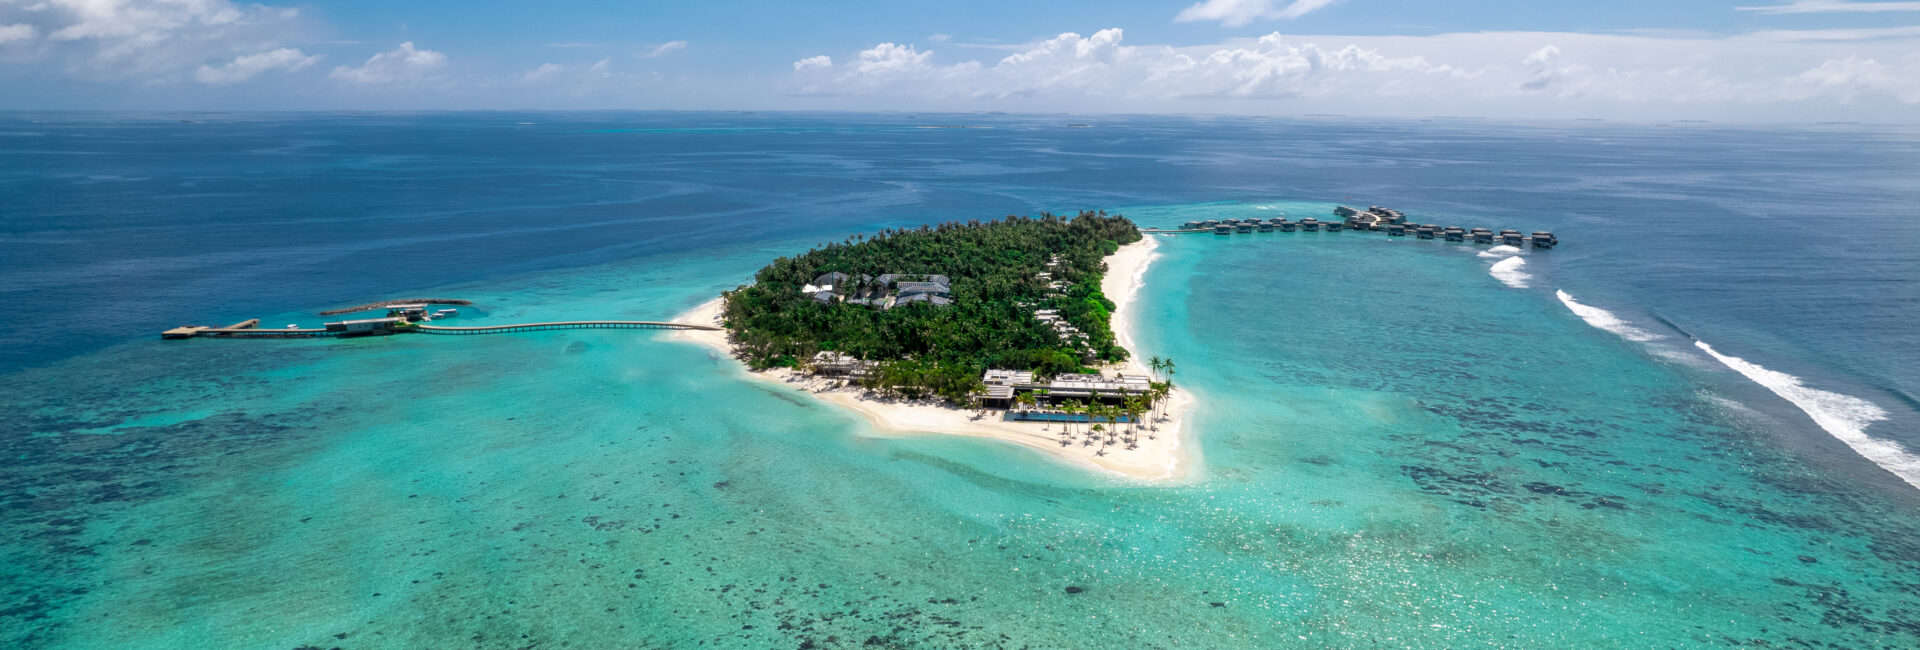 Alila Kothaifaru Maldives - Island Aerial Shot Side Angle